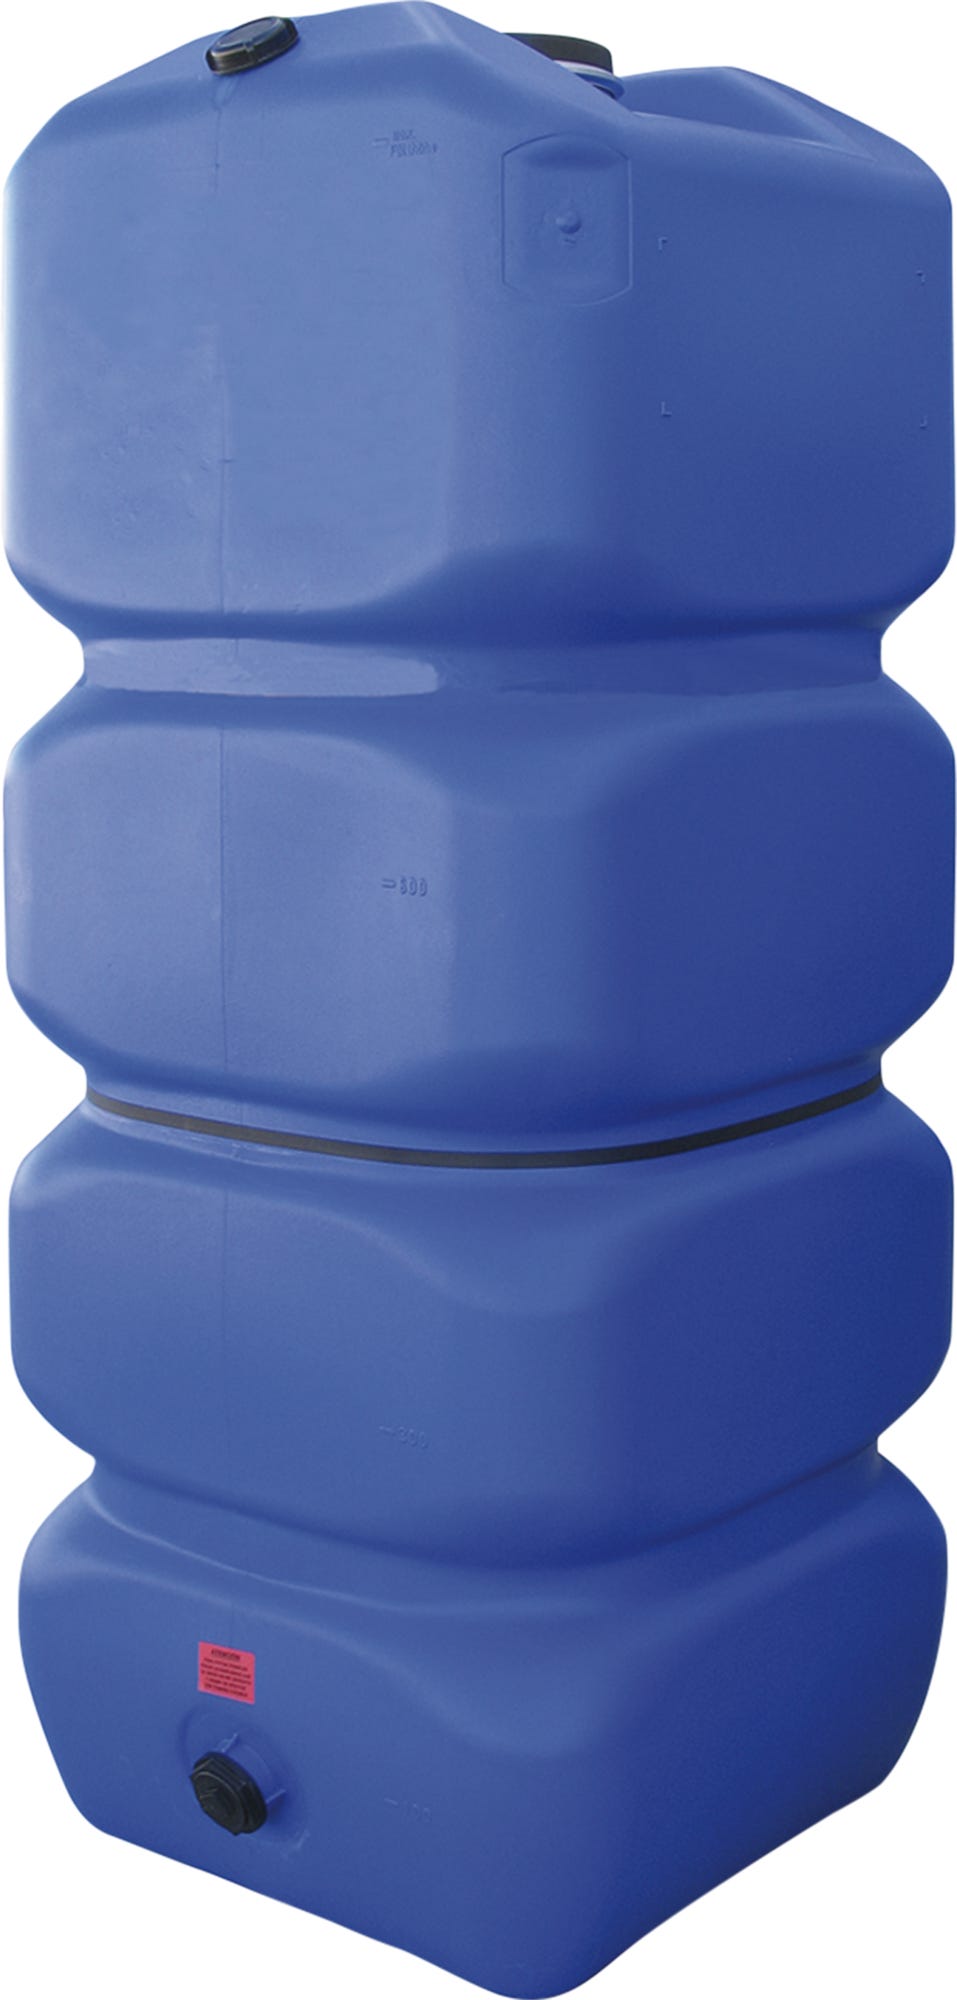 Depósito exterior polietileno de alta densidad azul 750 litros 0.735x0.735m